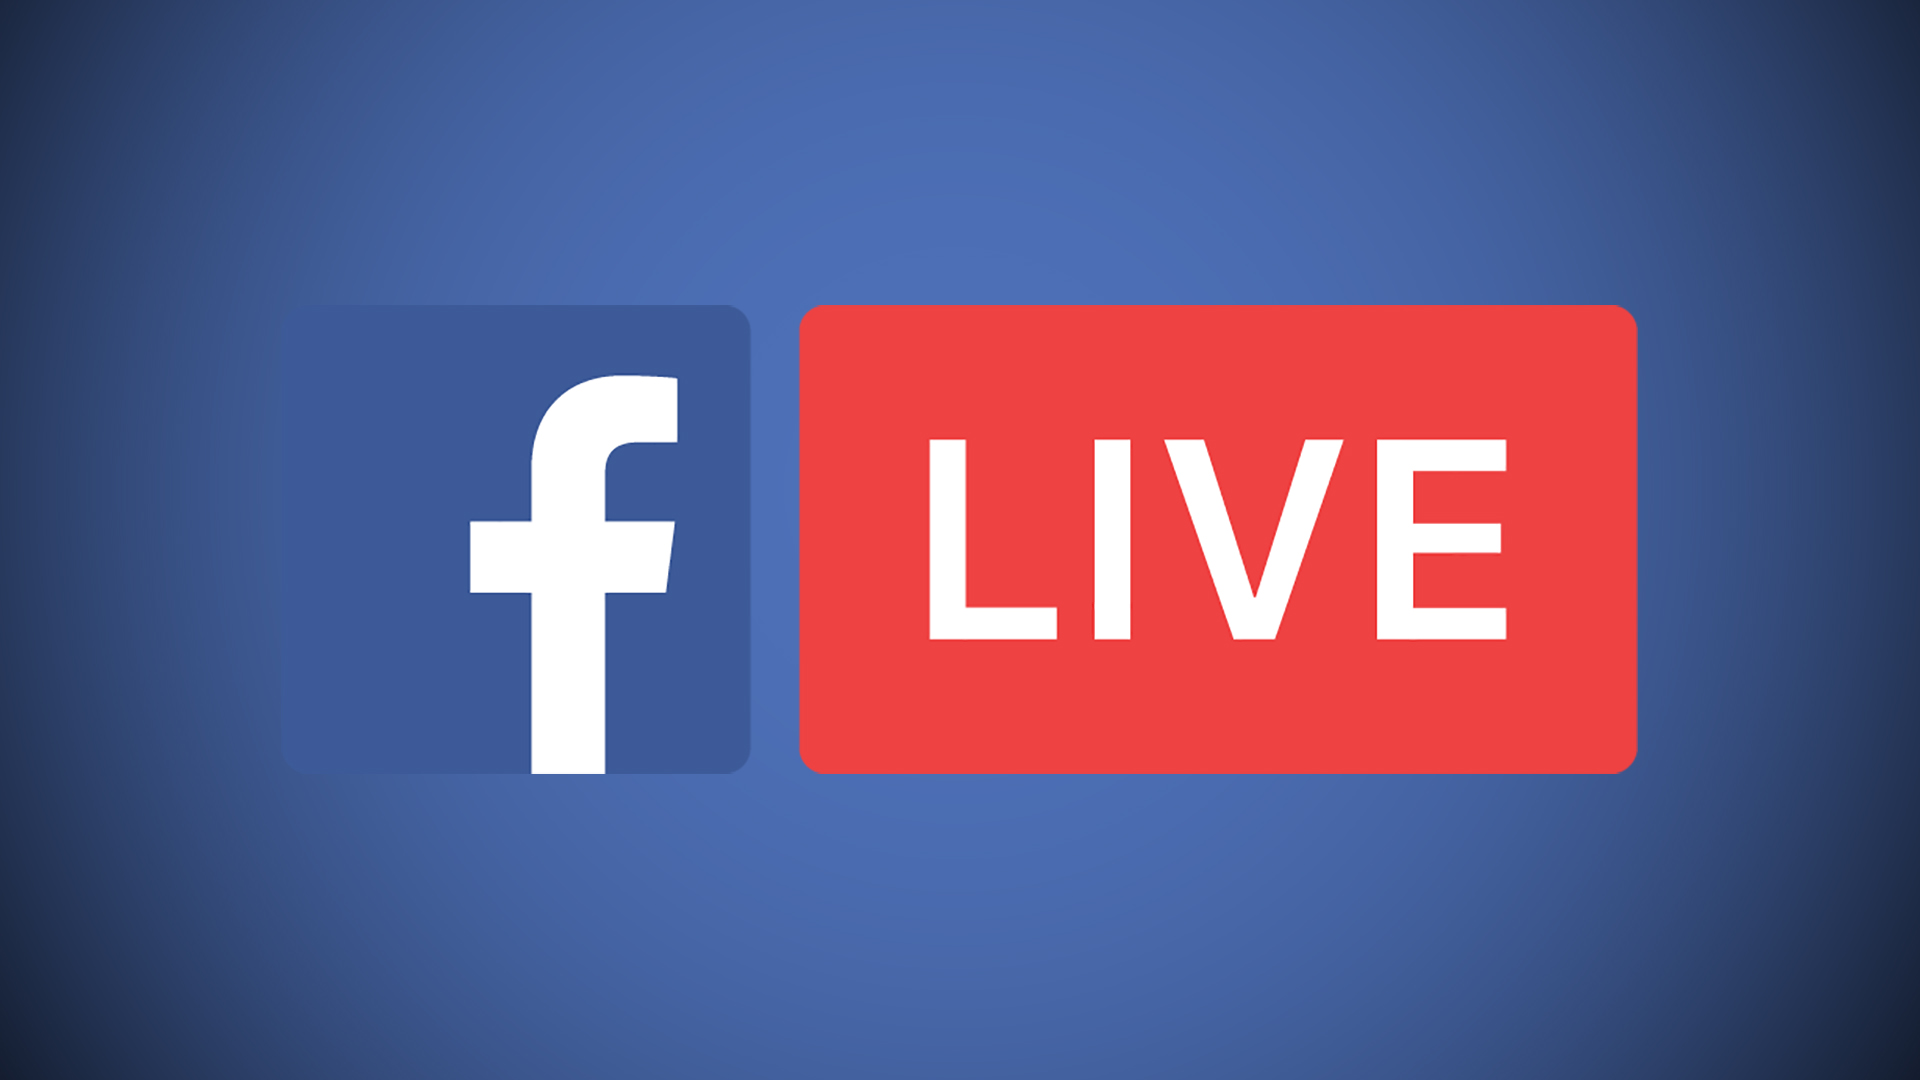 facebook-live-logo2-1920.jpg